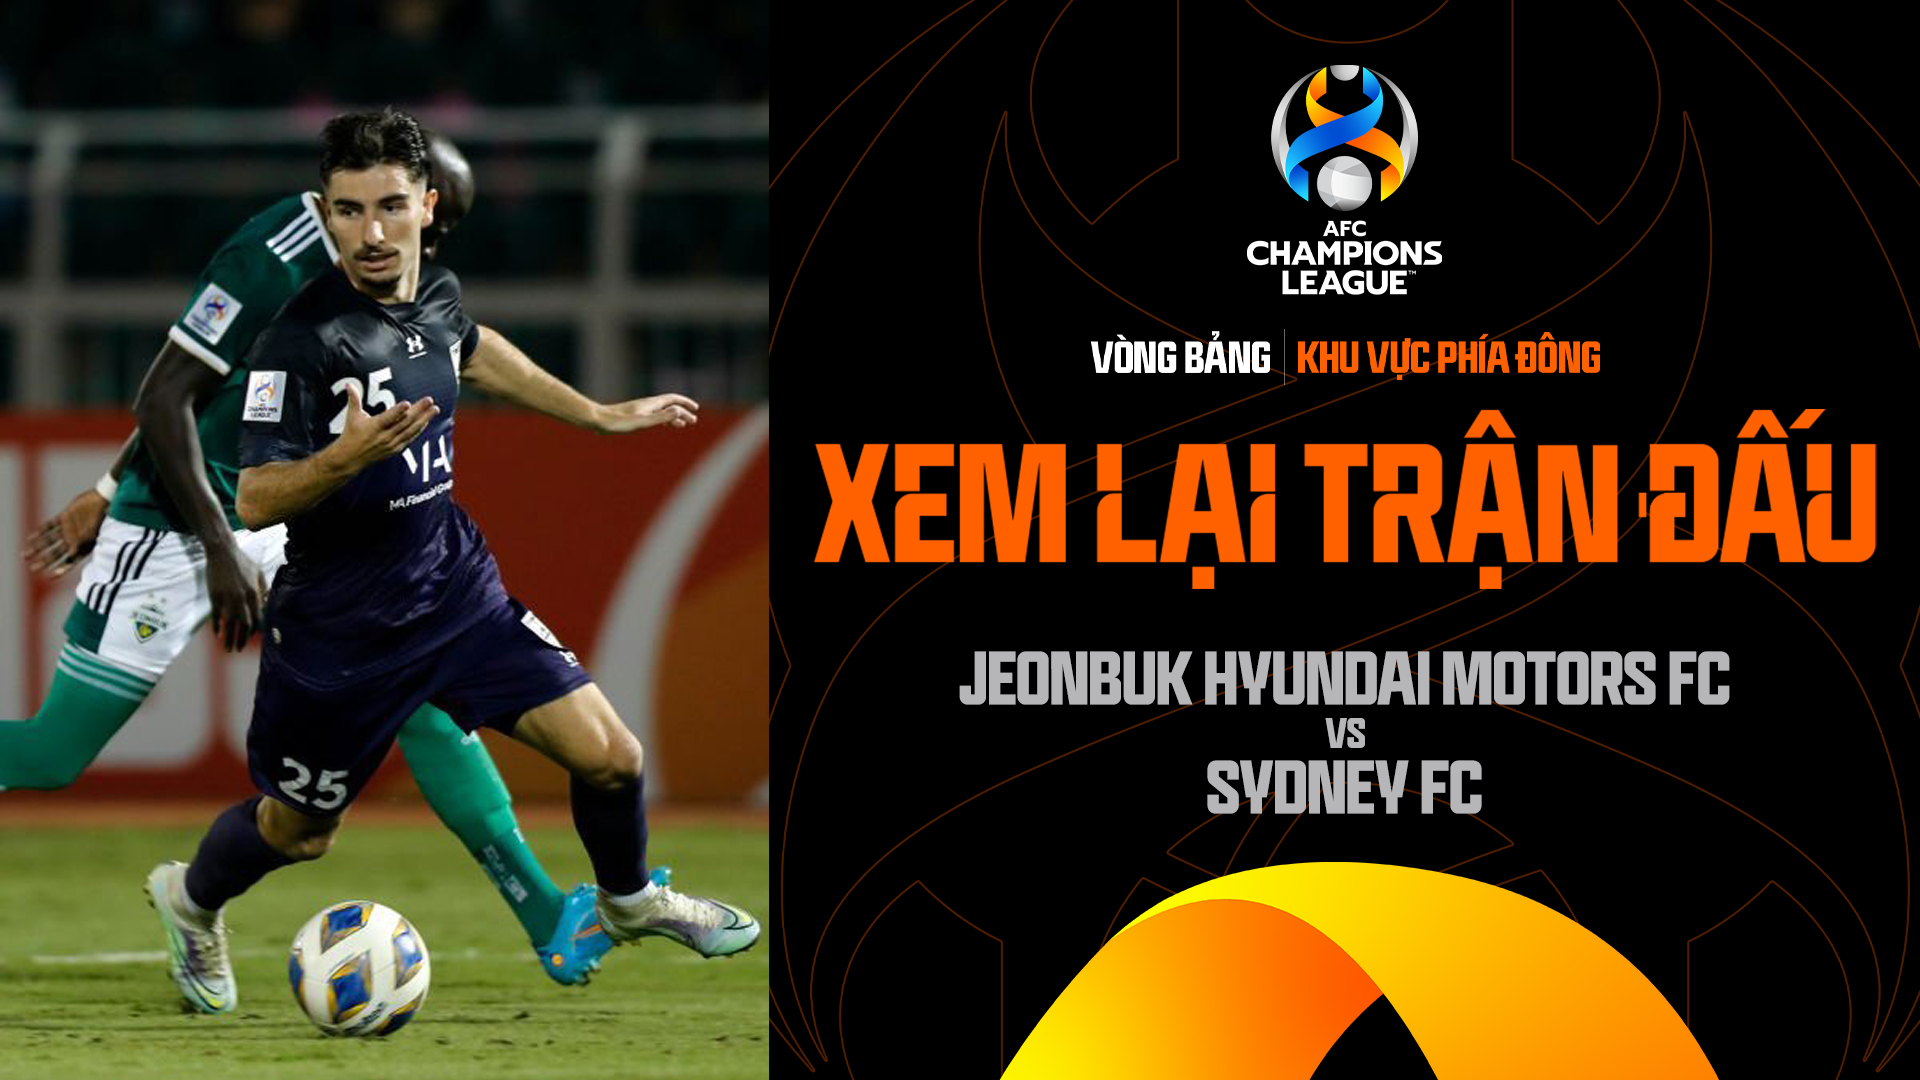 Jeonbuk Hyundai Motors FC - Sydney FC | Xem lại trận đấu - AFC Champions League